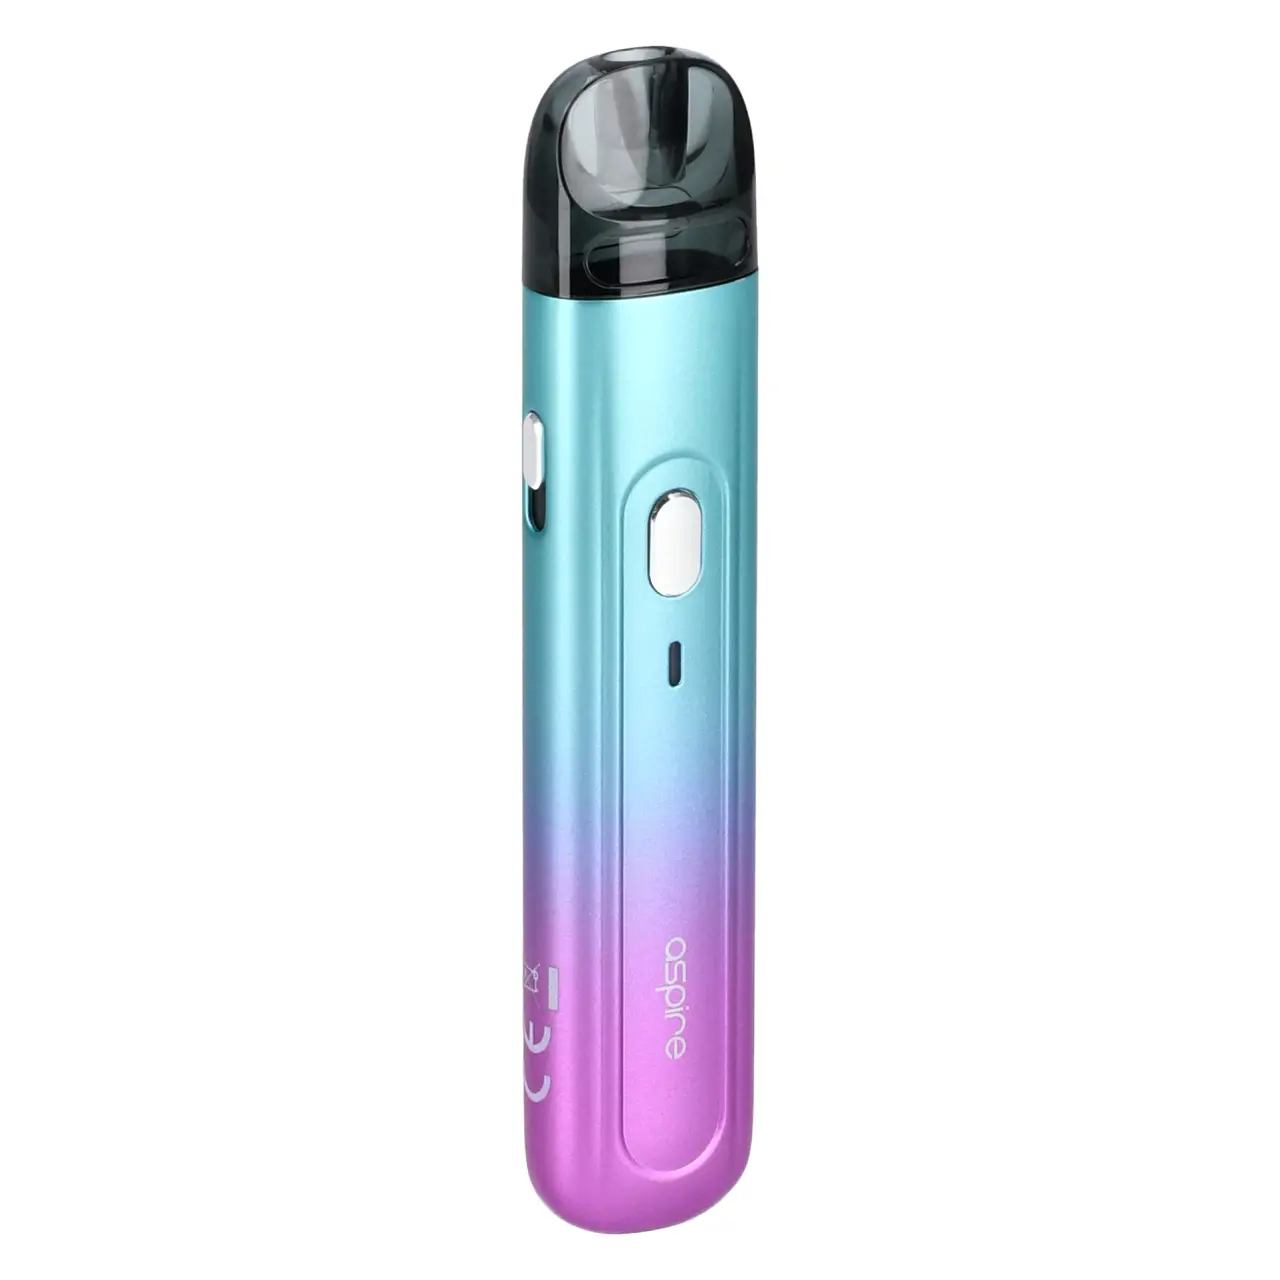 Aspire Flexus Q E-Zigarette in der Farbe Aquamarin - Vorne